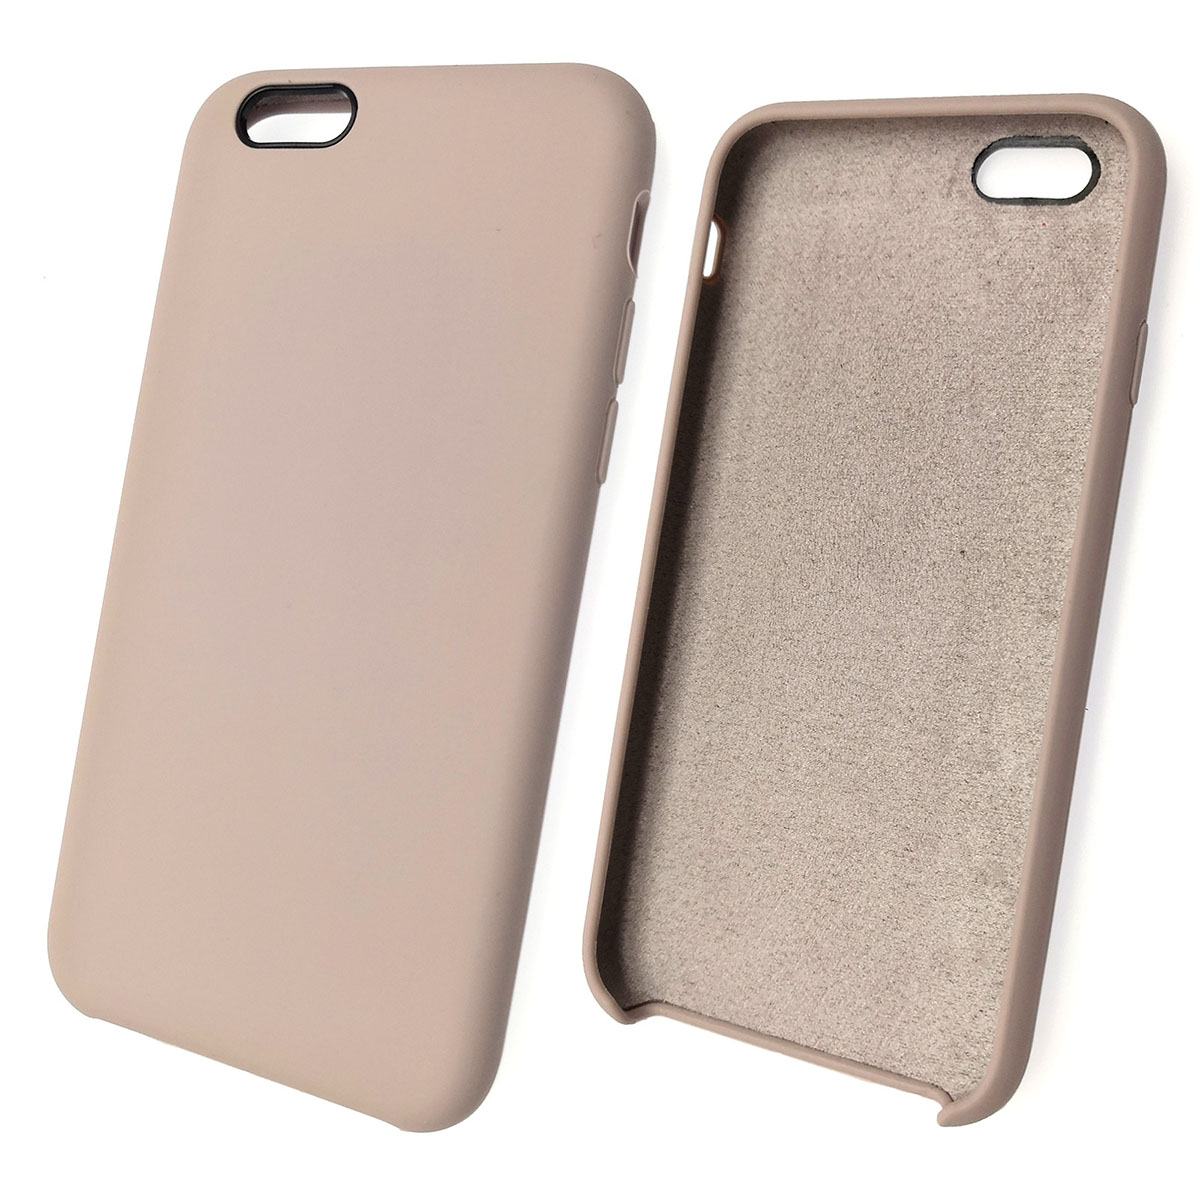 Чехол накладка Silicon Case для APPLE iPhone 6, 6G, 6S, силикон, бархат, цвет лаванда.